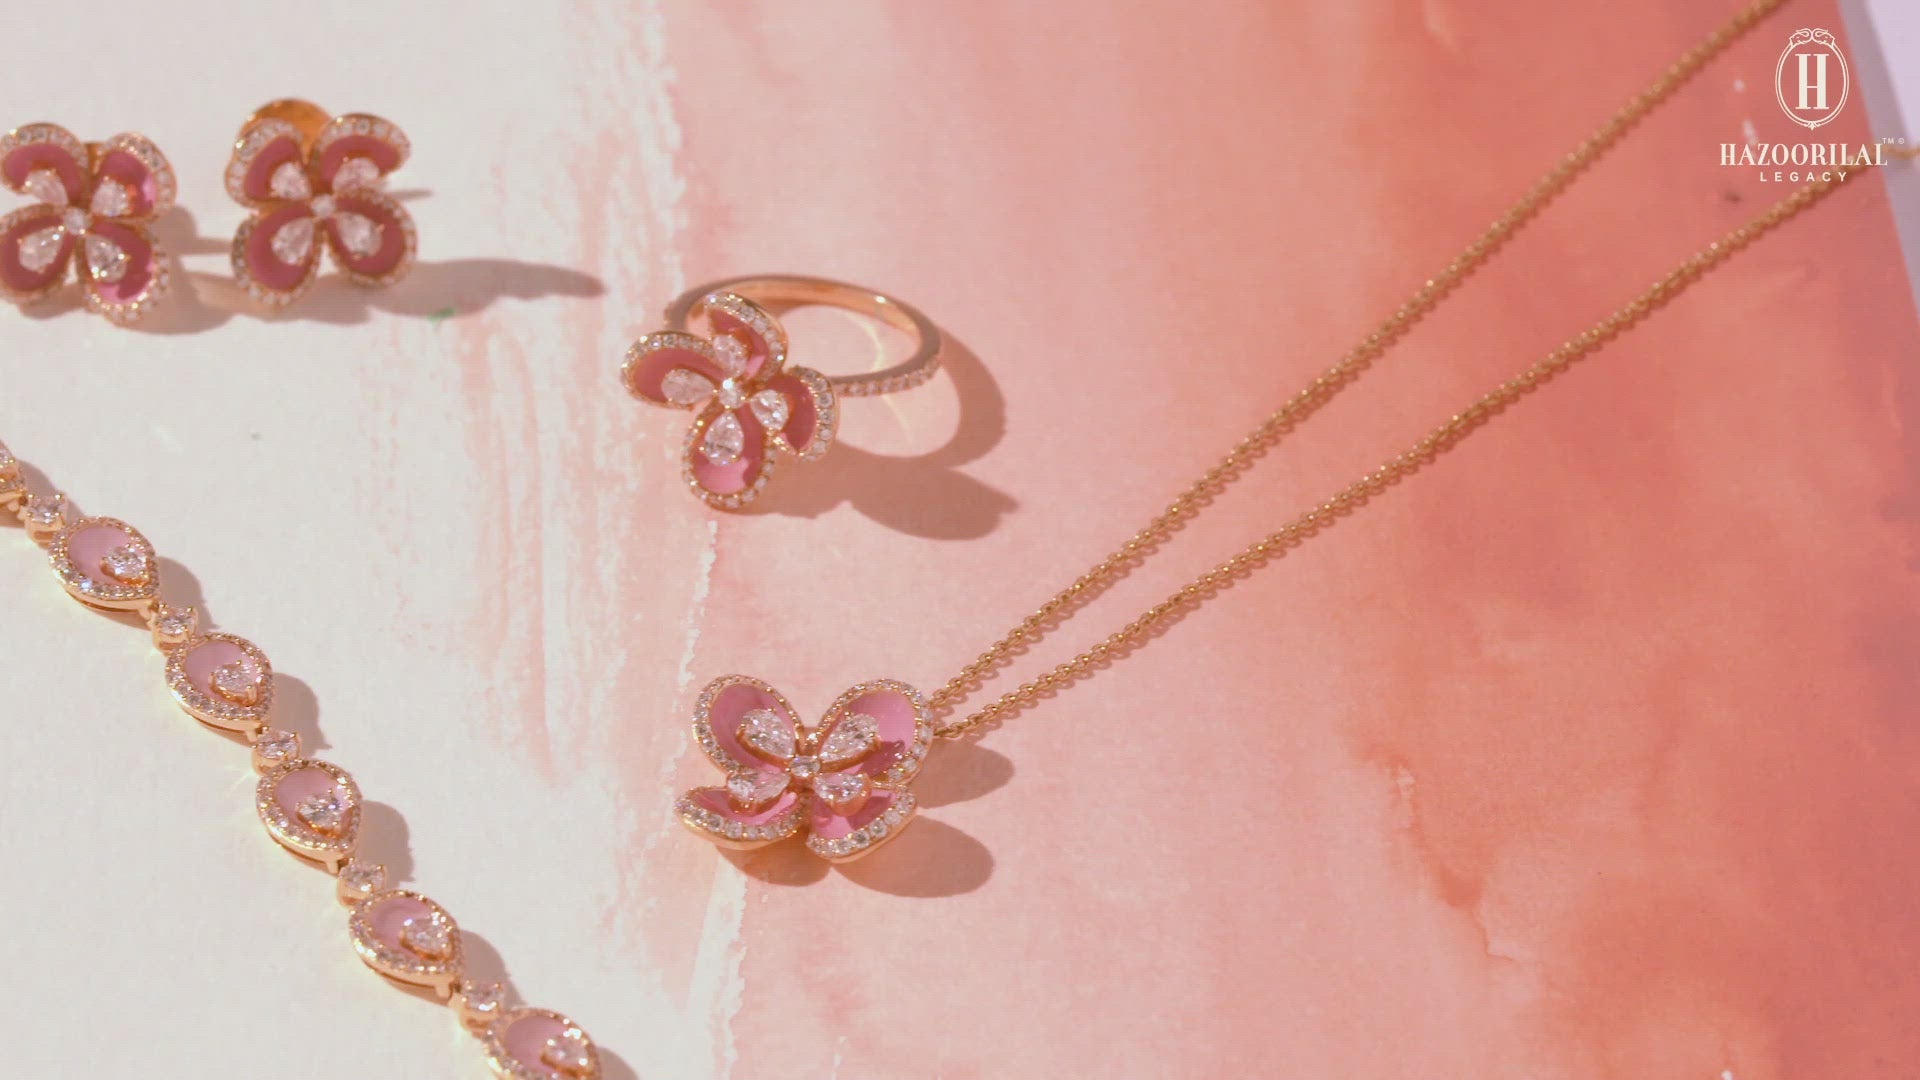 hazoorilaal pink gold jewellery ring set